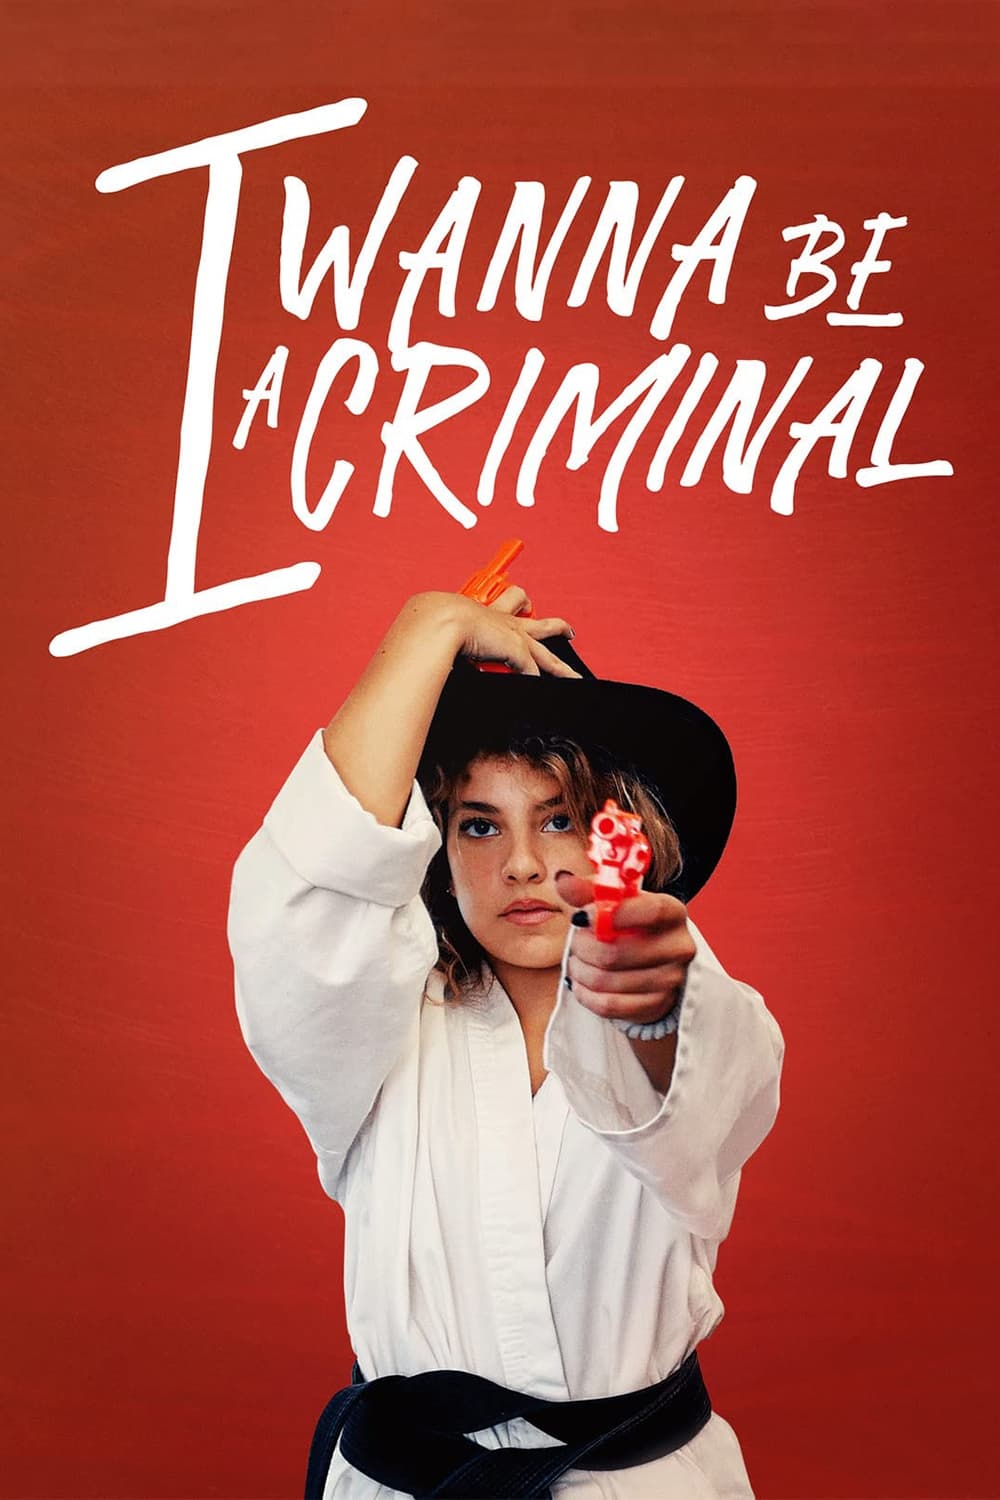 I Wanna Be a Criminal